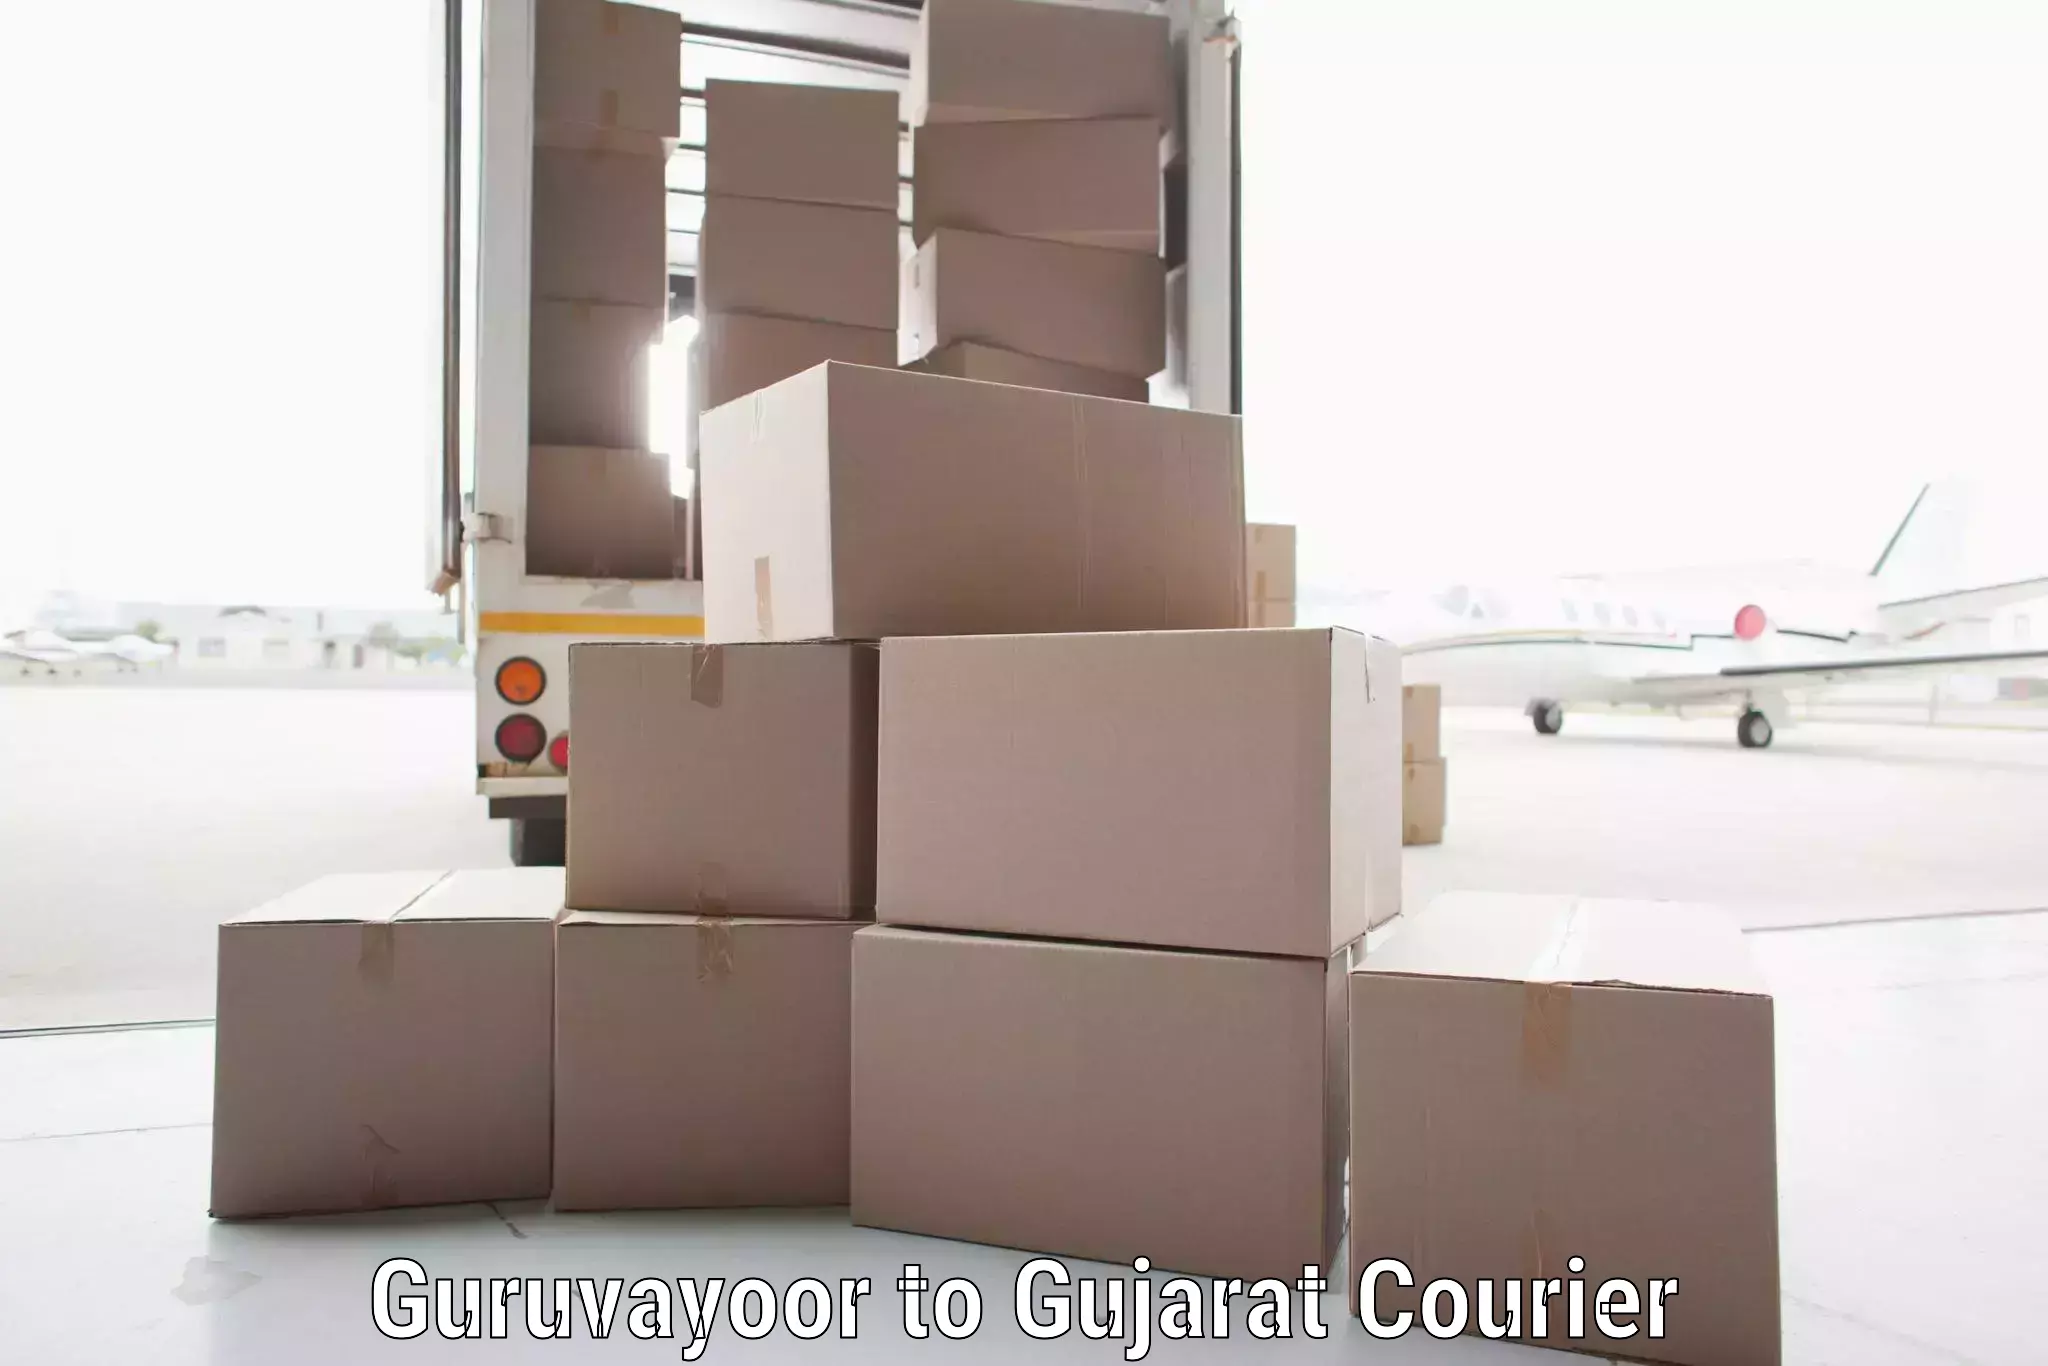 Courier service comparison in Guruvayoor to Khedbrahma